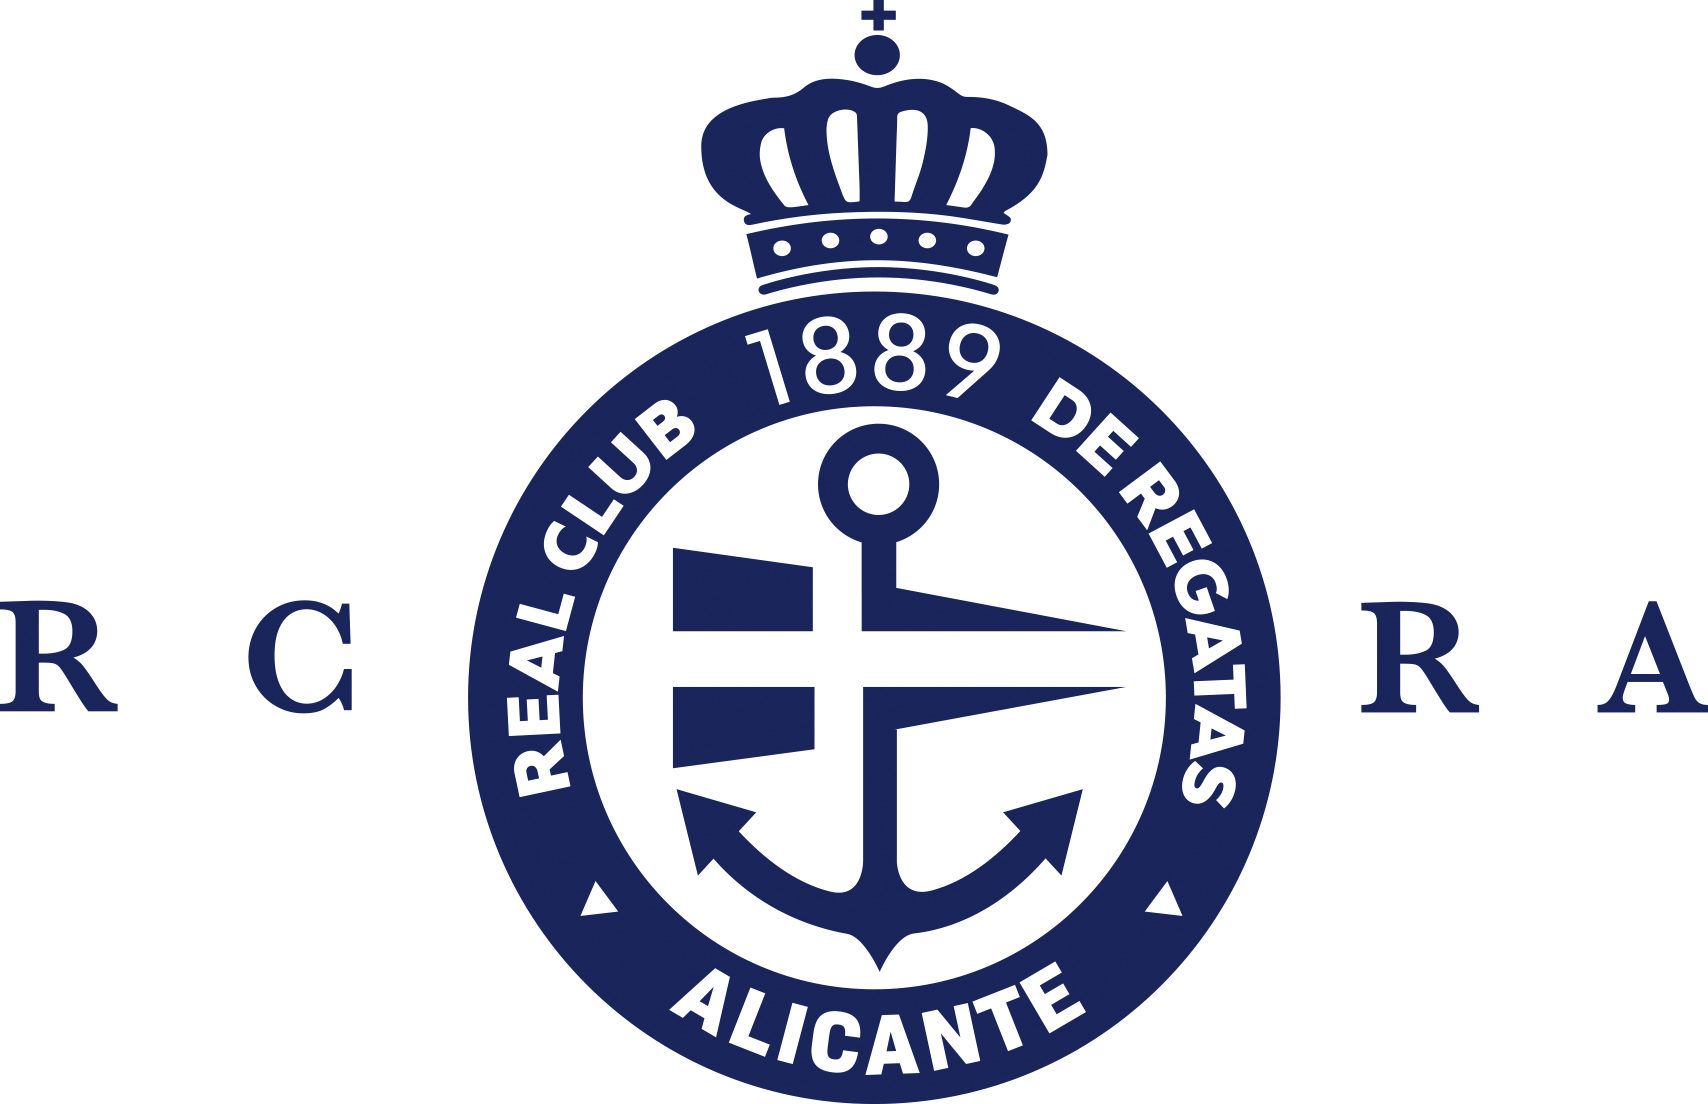 Real Club Regata Alicante